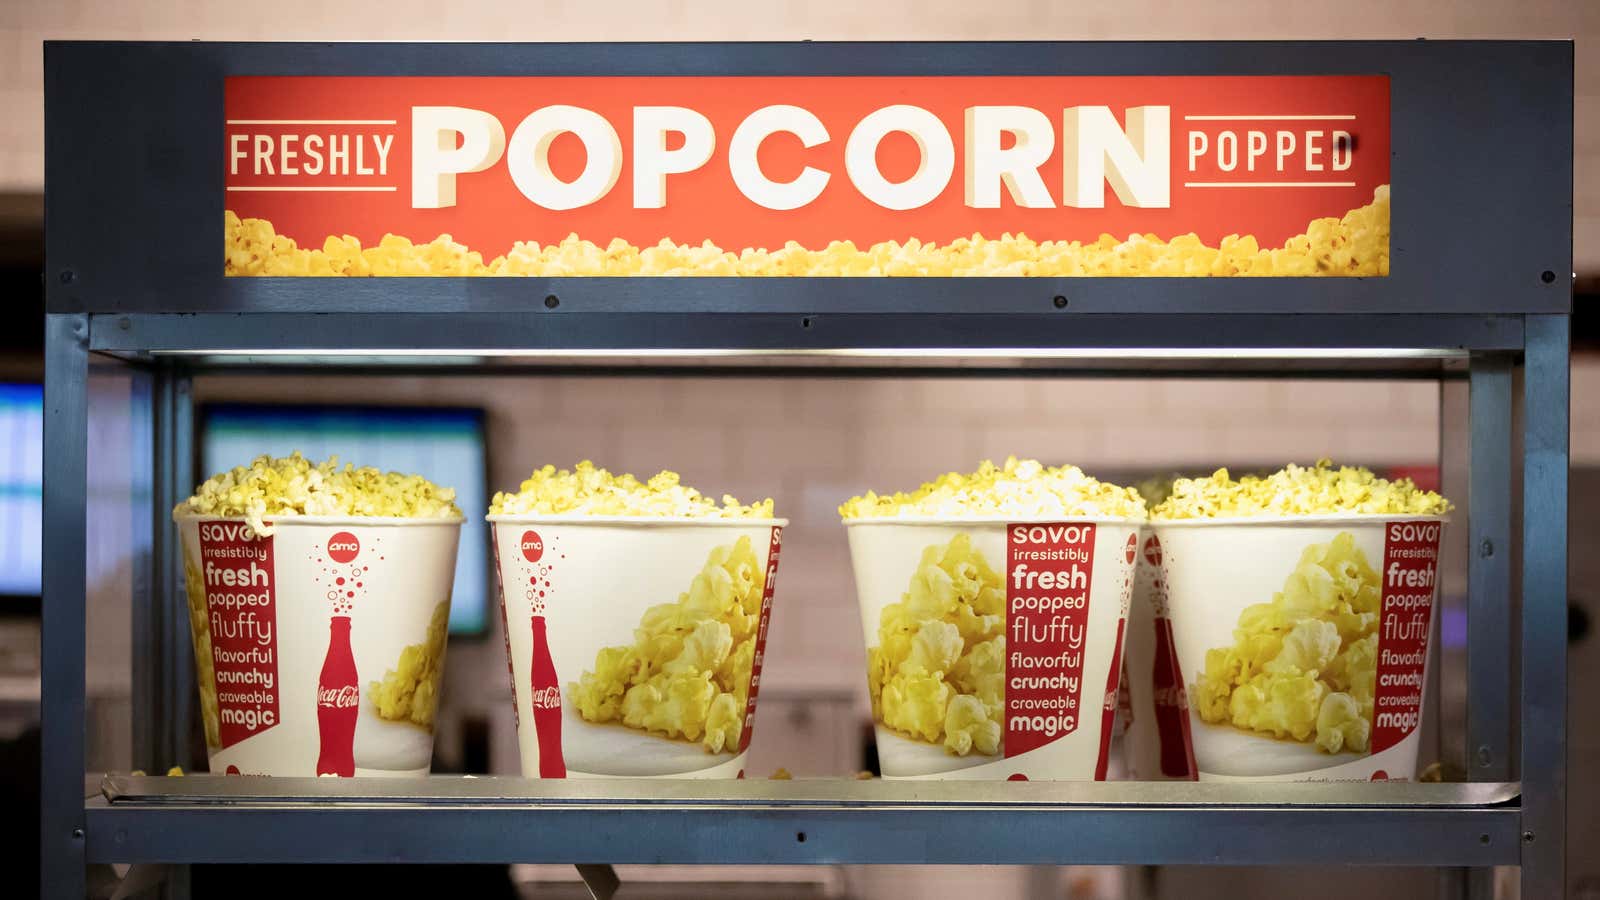 AMC recently gave free popcorn to investors.